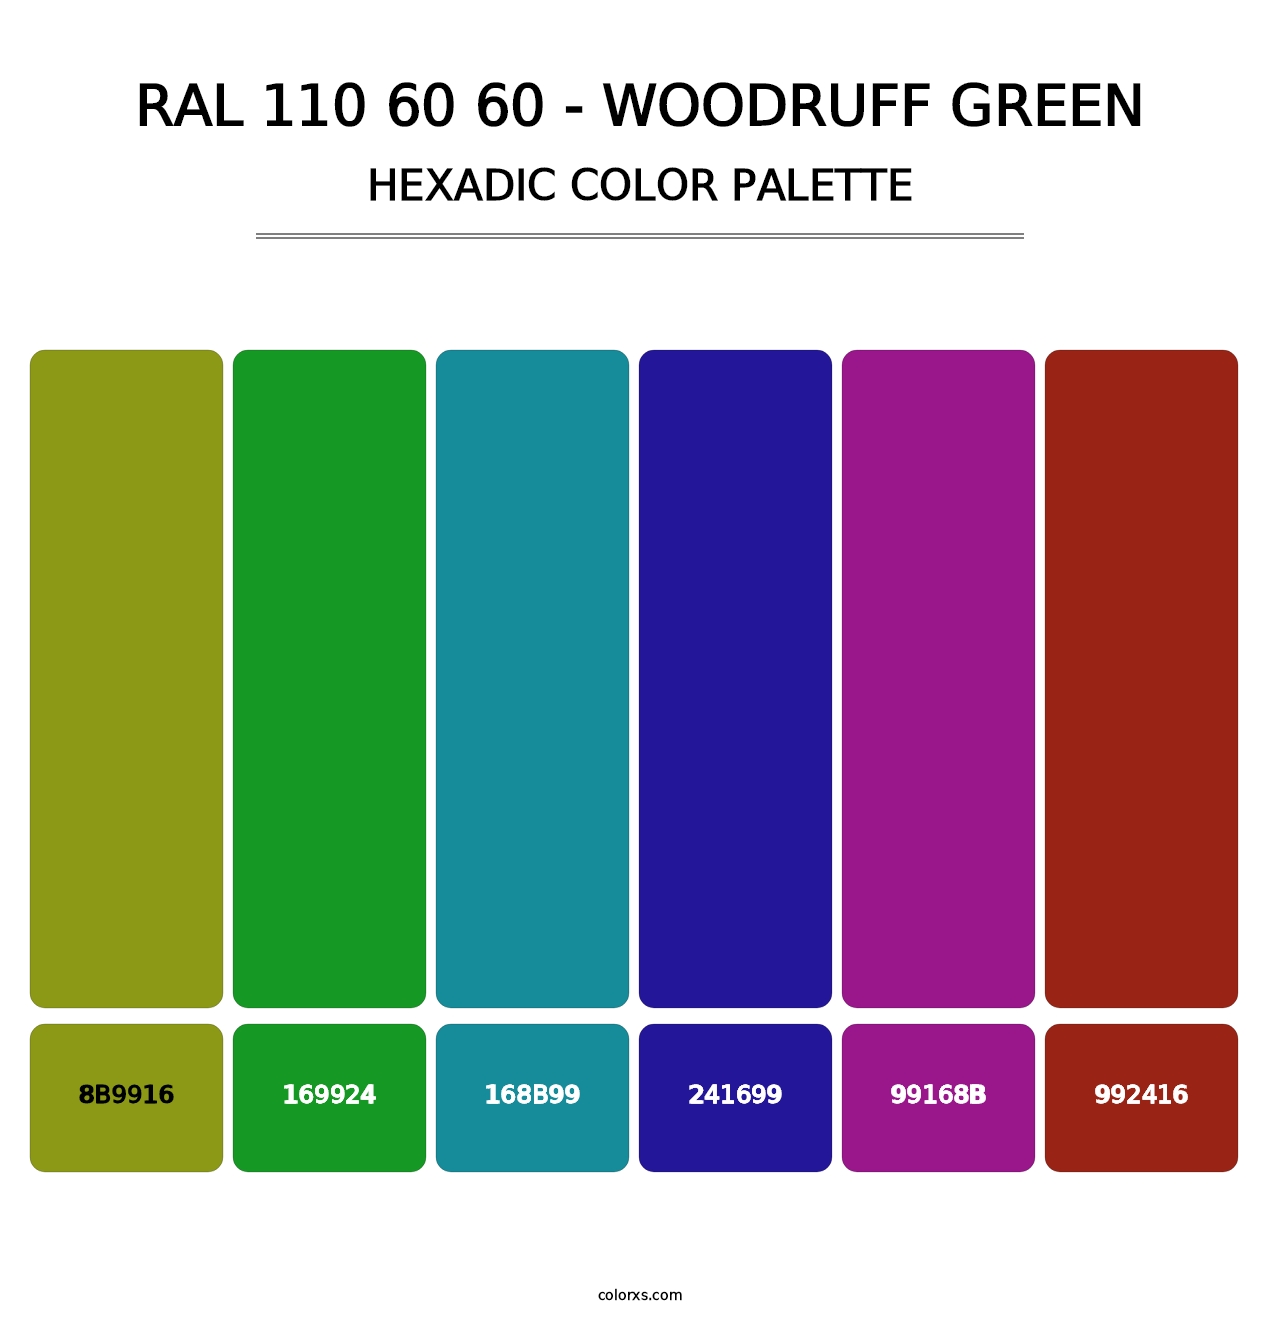 RAL 110 60 60 - Woodruff Green - Hexadic Color Palette